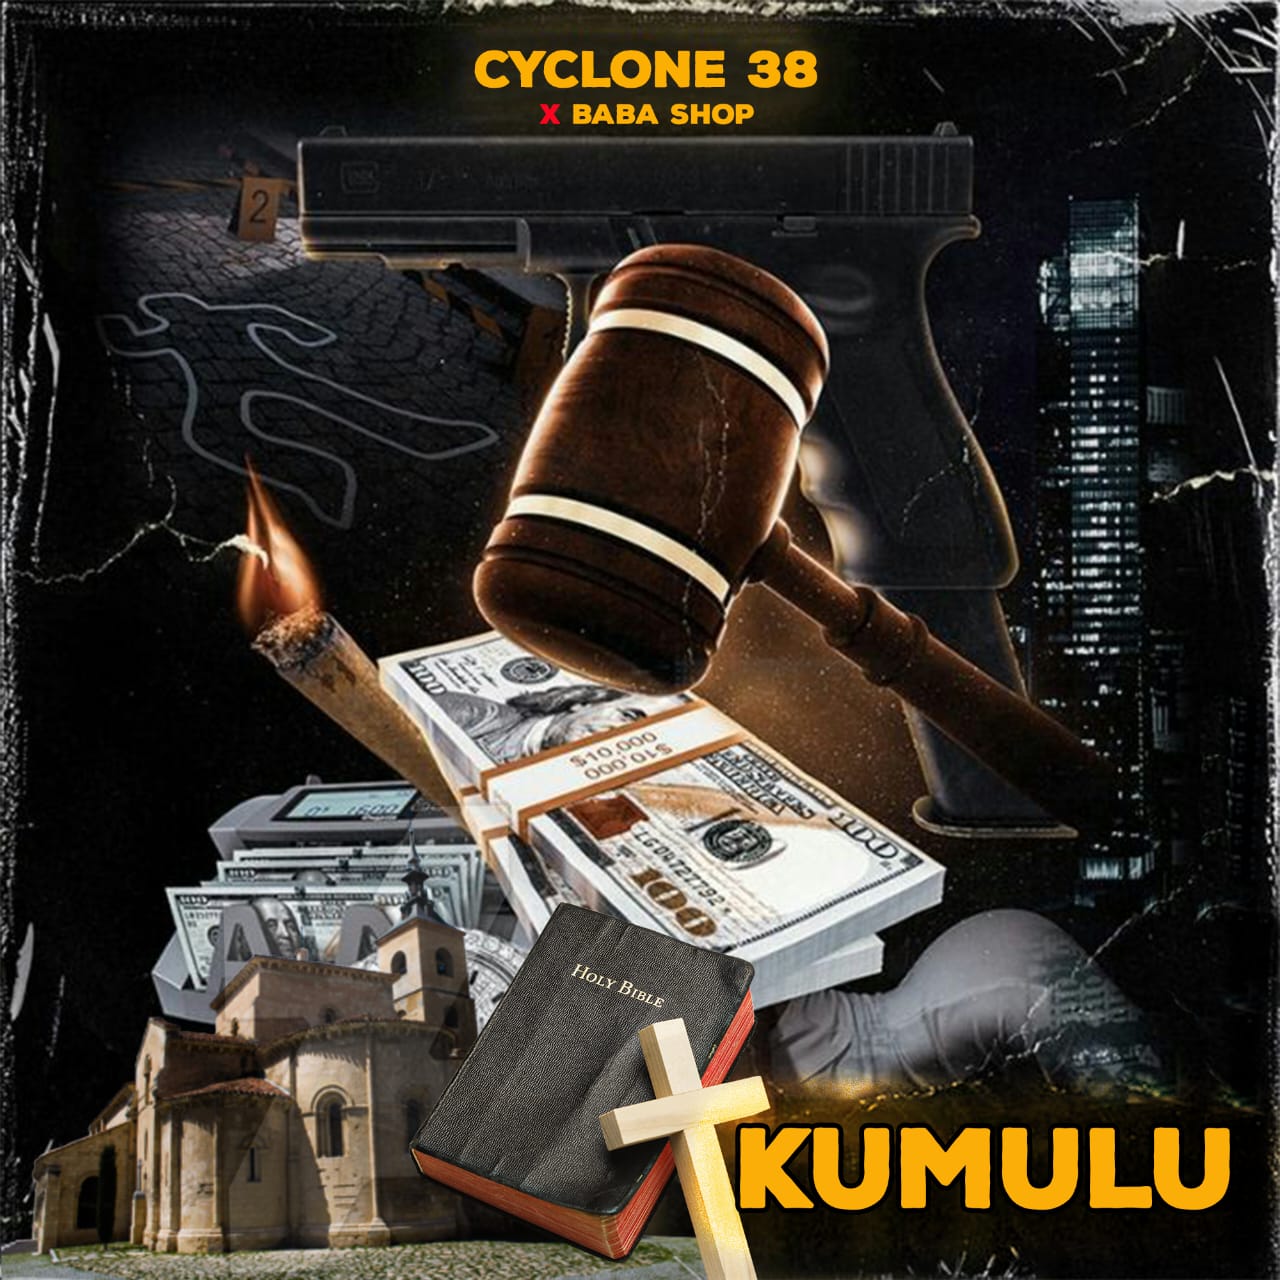 Cyclone 38 X Baba Shop - Kumulu